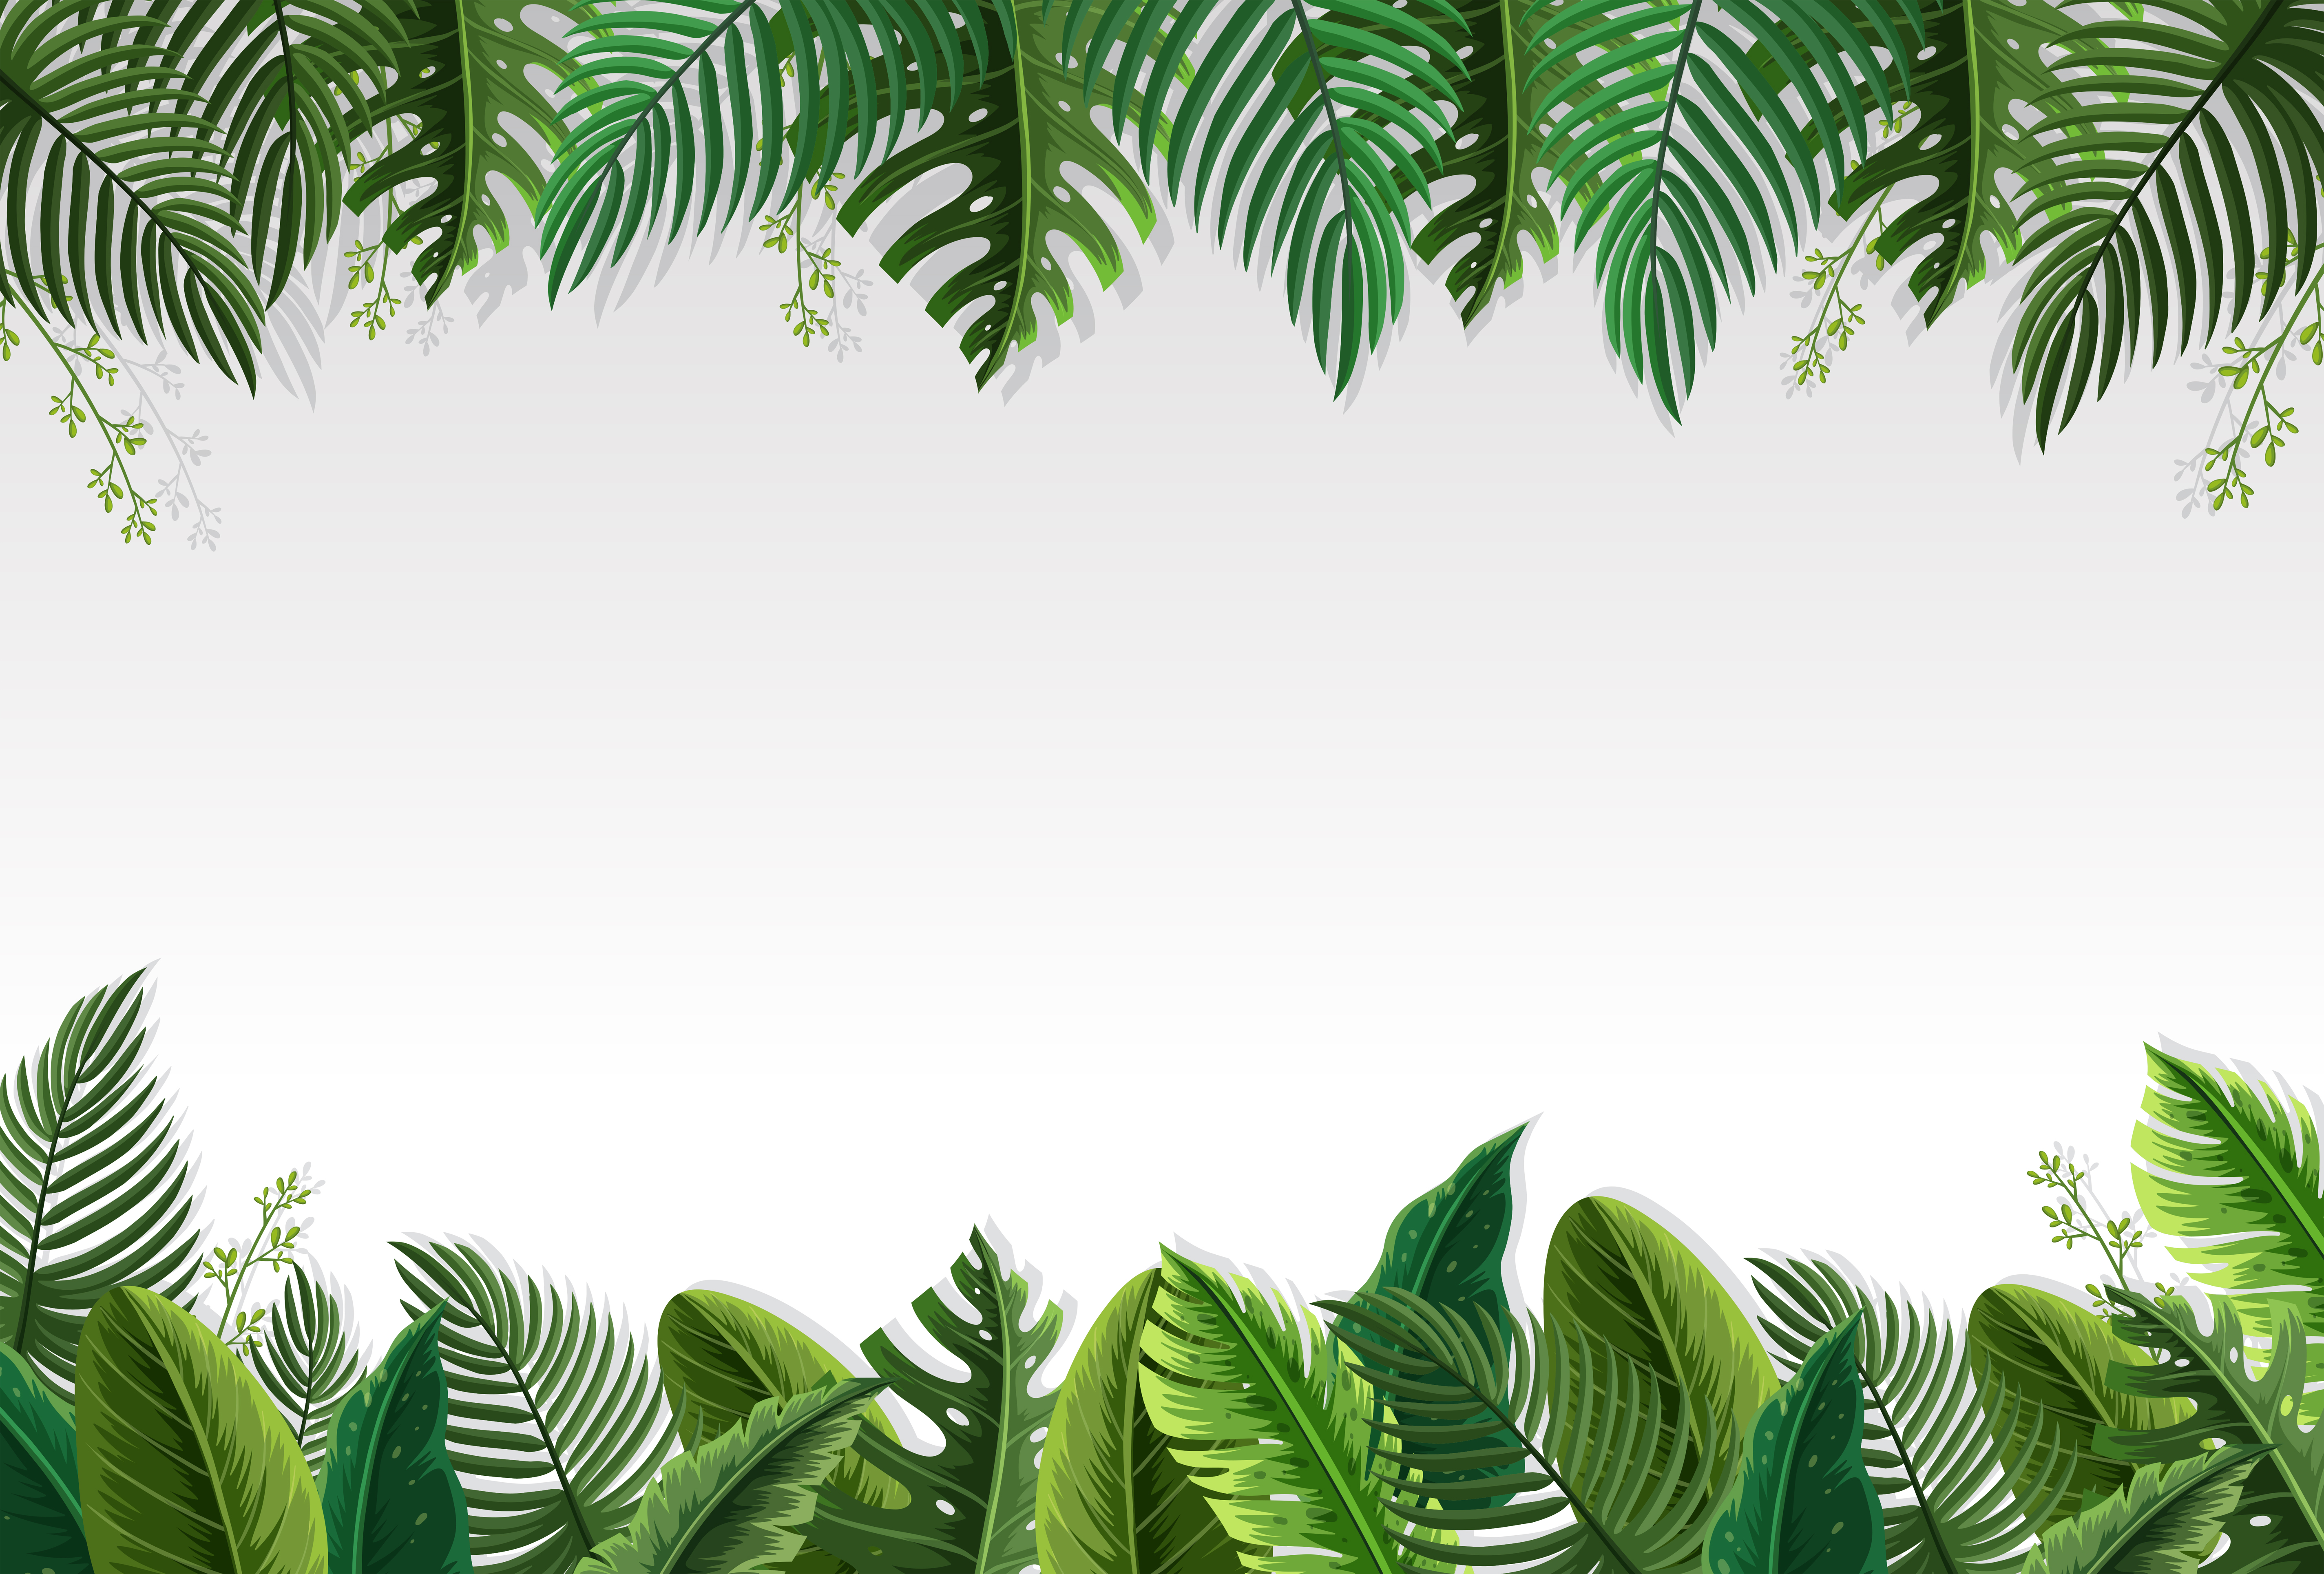 Download Palm Leaf Border Free Vector Art - (130 Free Downloads)